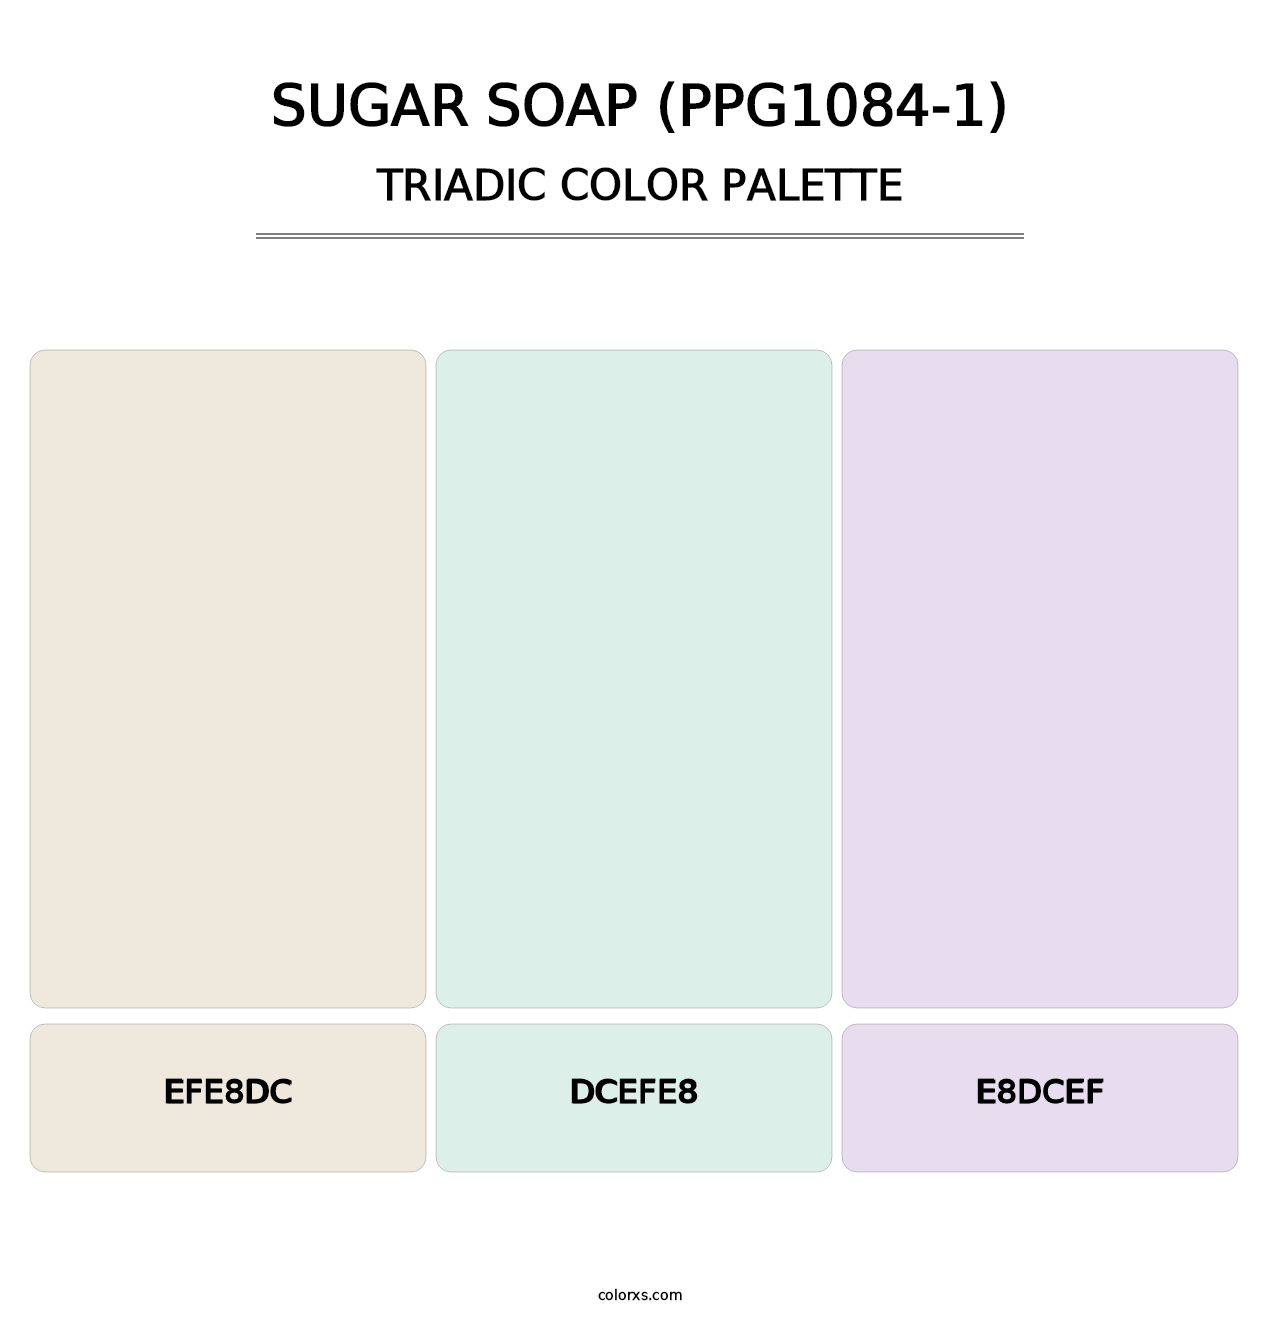 Sugar Soap (PPG1084-1) - Triadic Color Palette